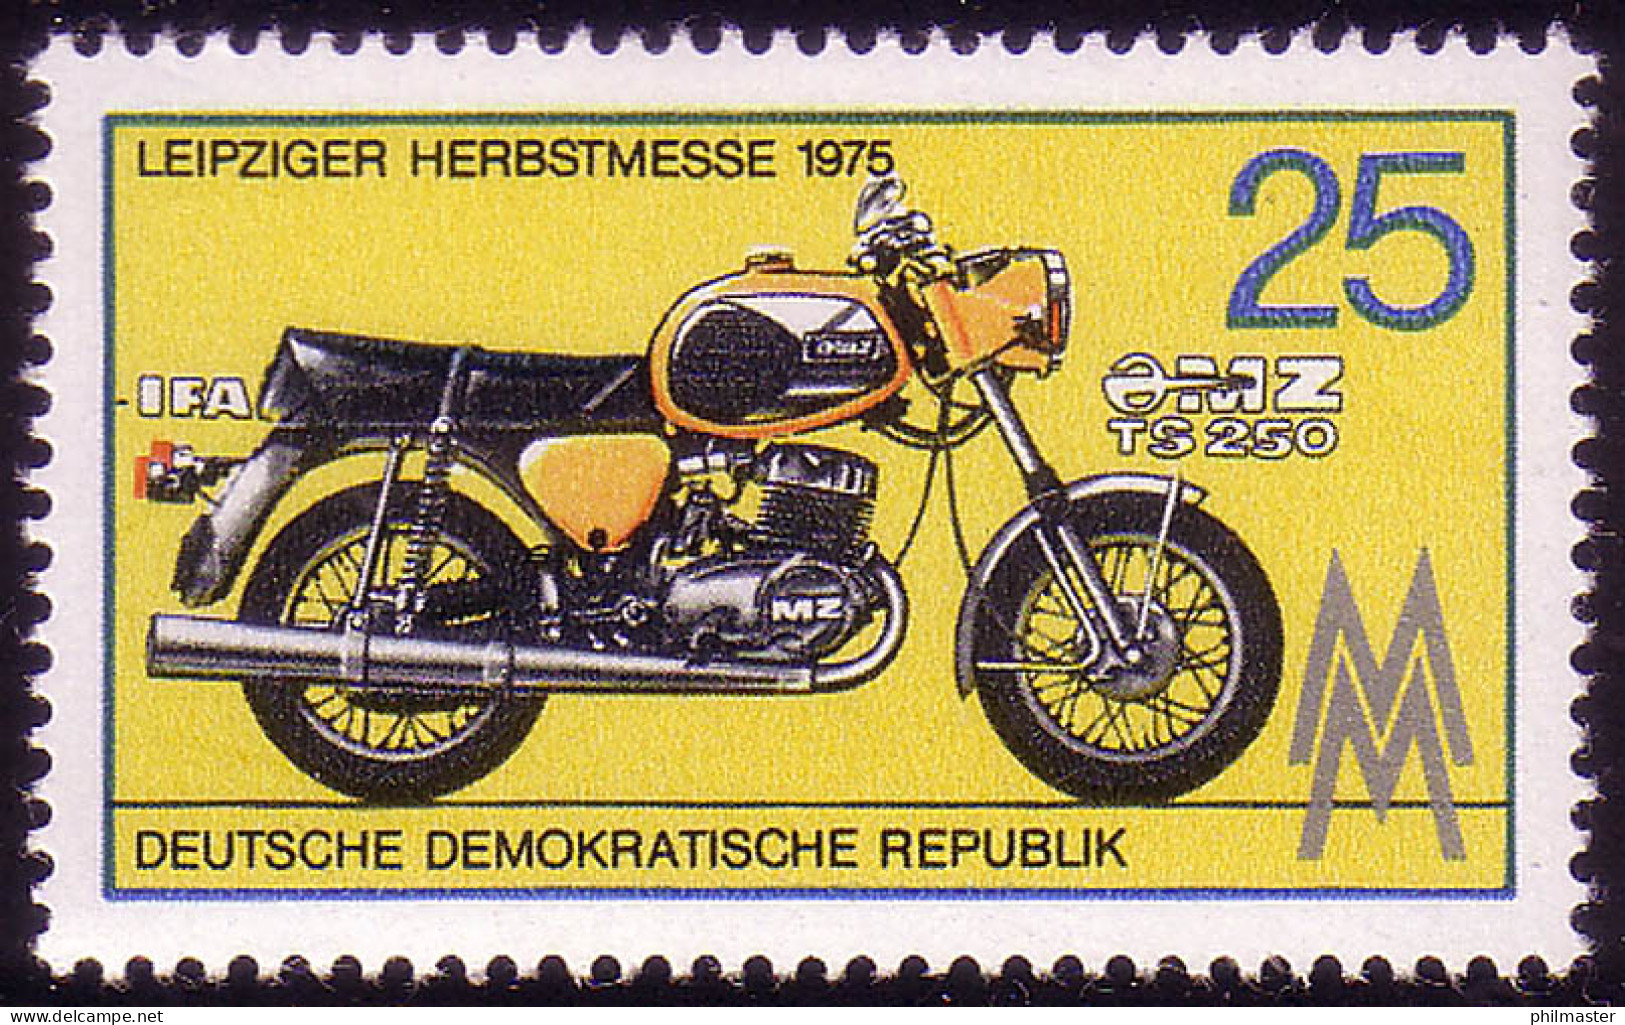 2077 Leipziger Herbstmesse 1975 25 Pf Motorrad IFA MZ TS 250, ** - Nuevos